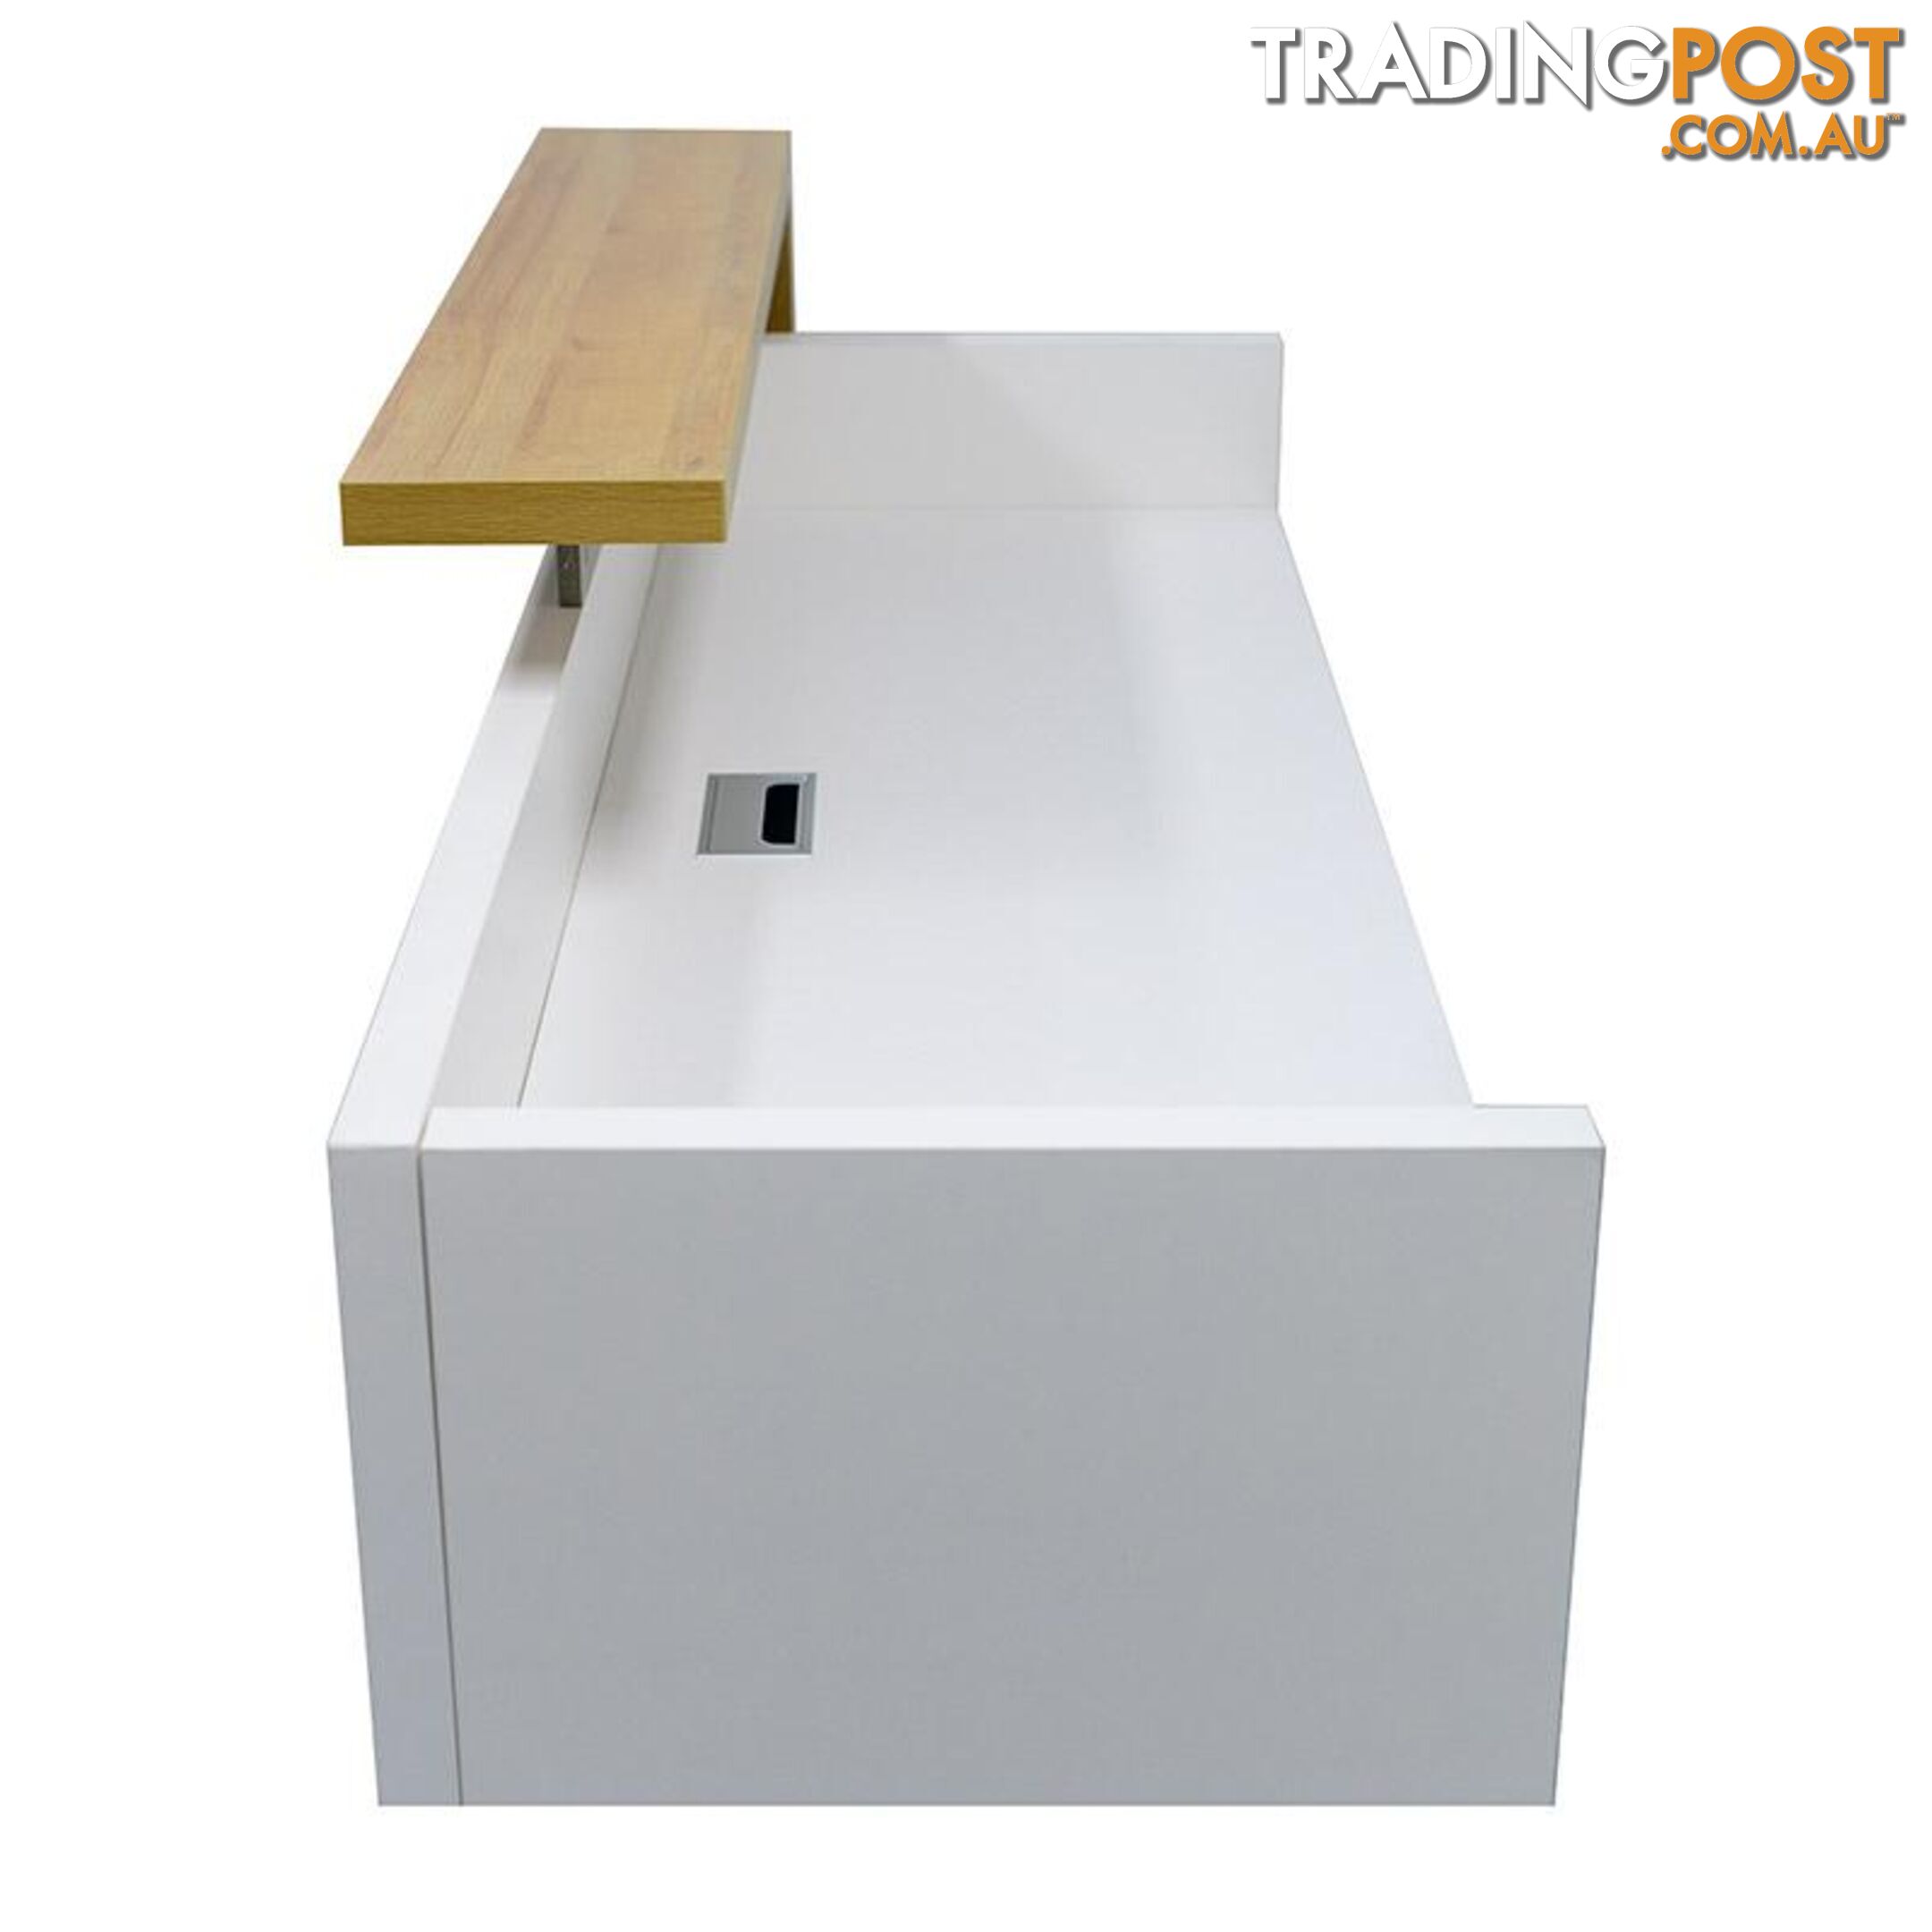 ZIVA Reception Desk 1.8M with Left Panel - White - MF-22RKH001 - 9334719001203